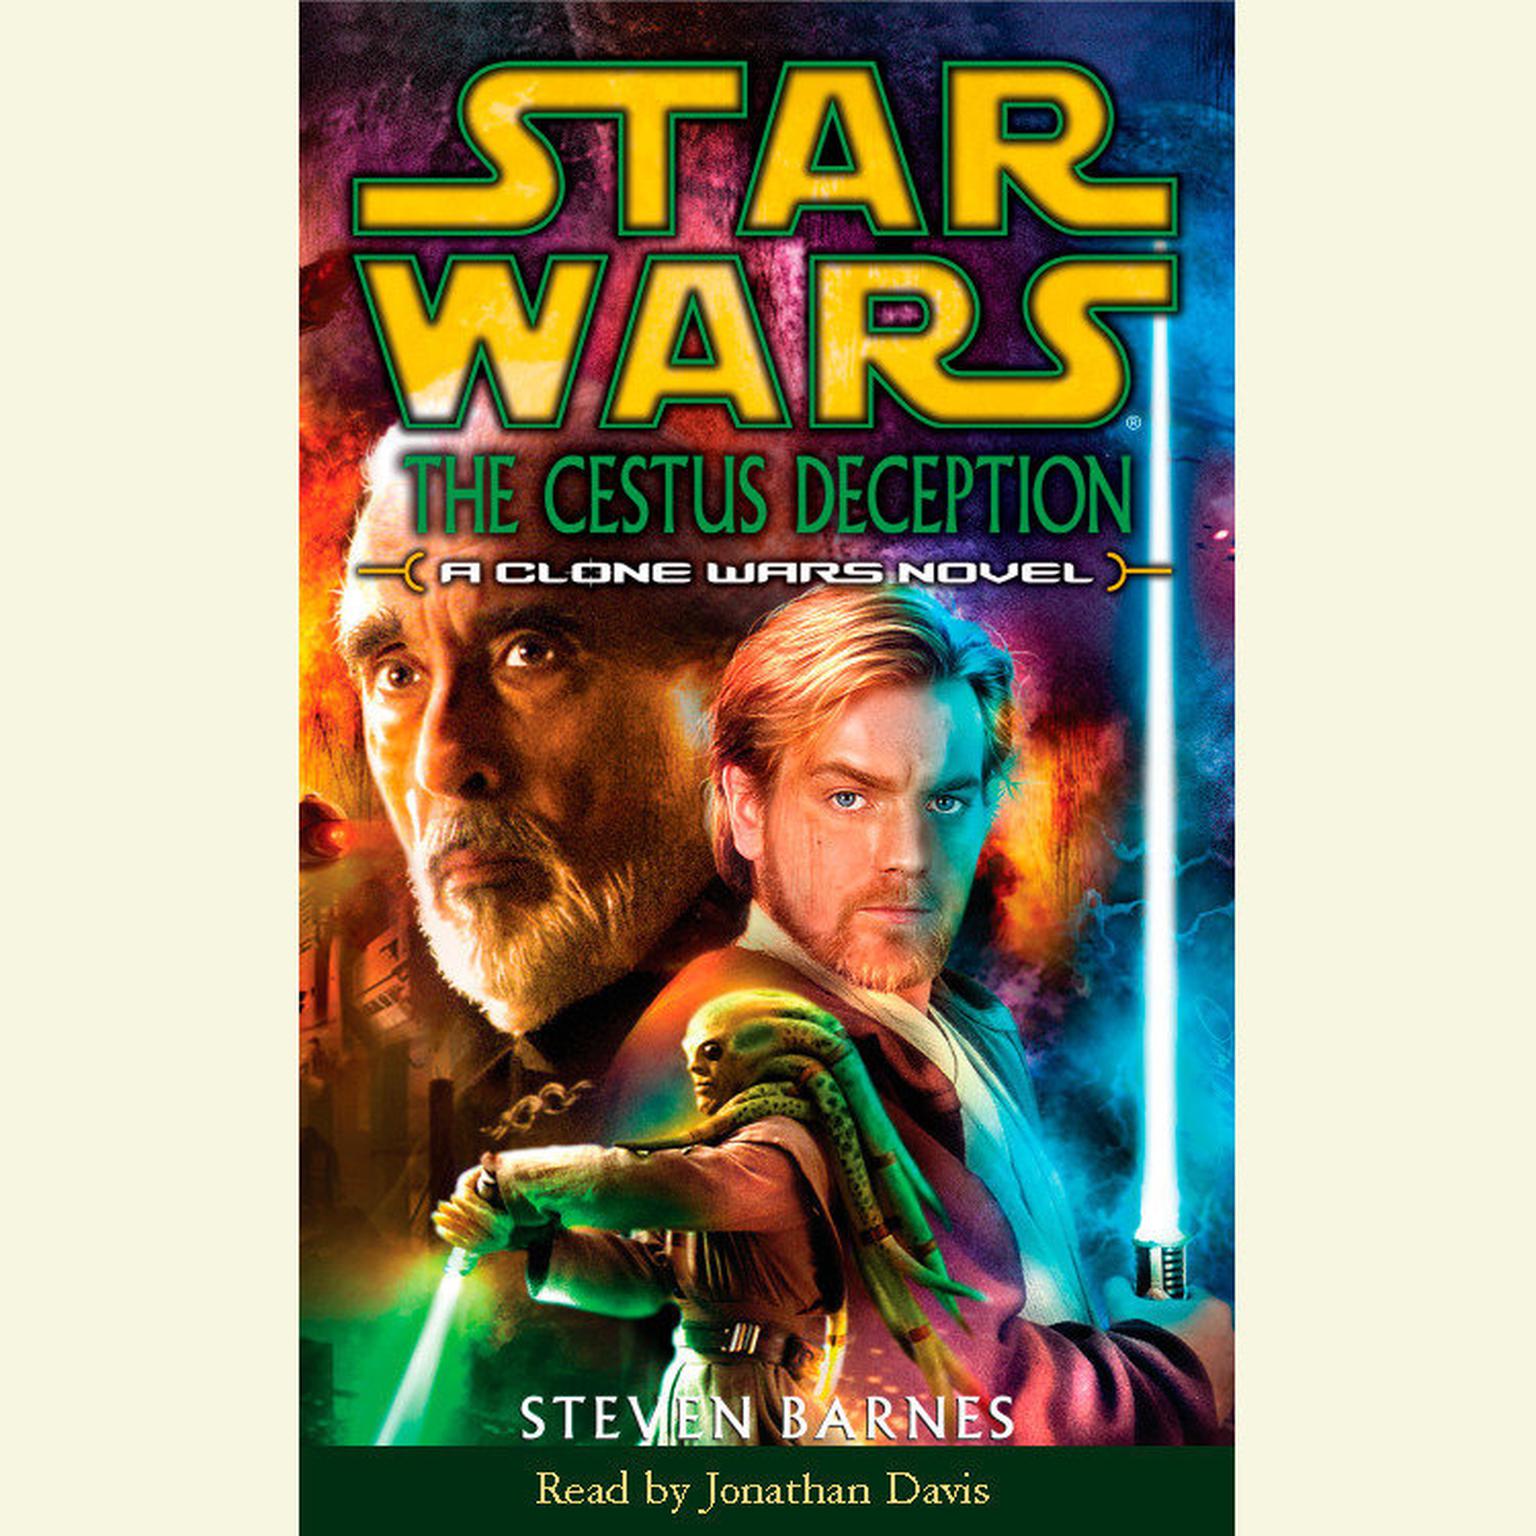 Star Wars: Clone Wars: The Cestus Deception (Abridged): A Clone Wars Novel Audiobook, by Steven Barnes